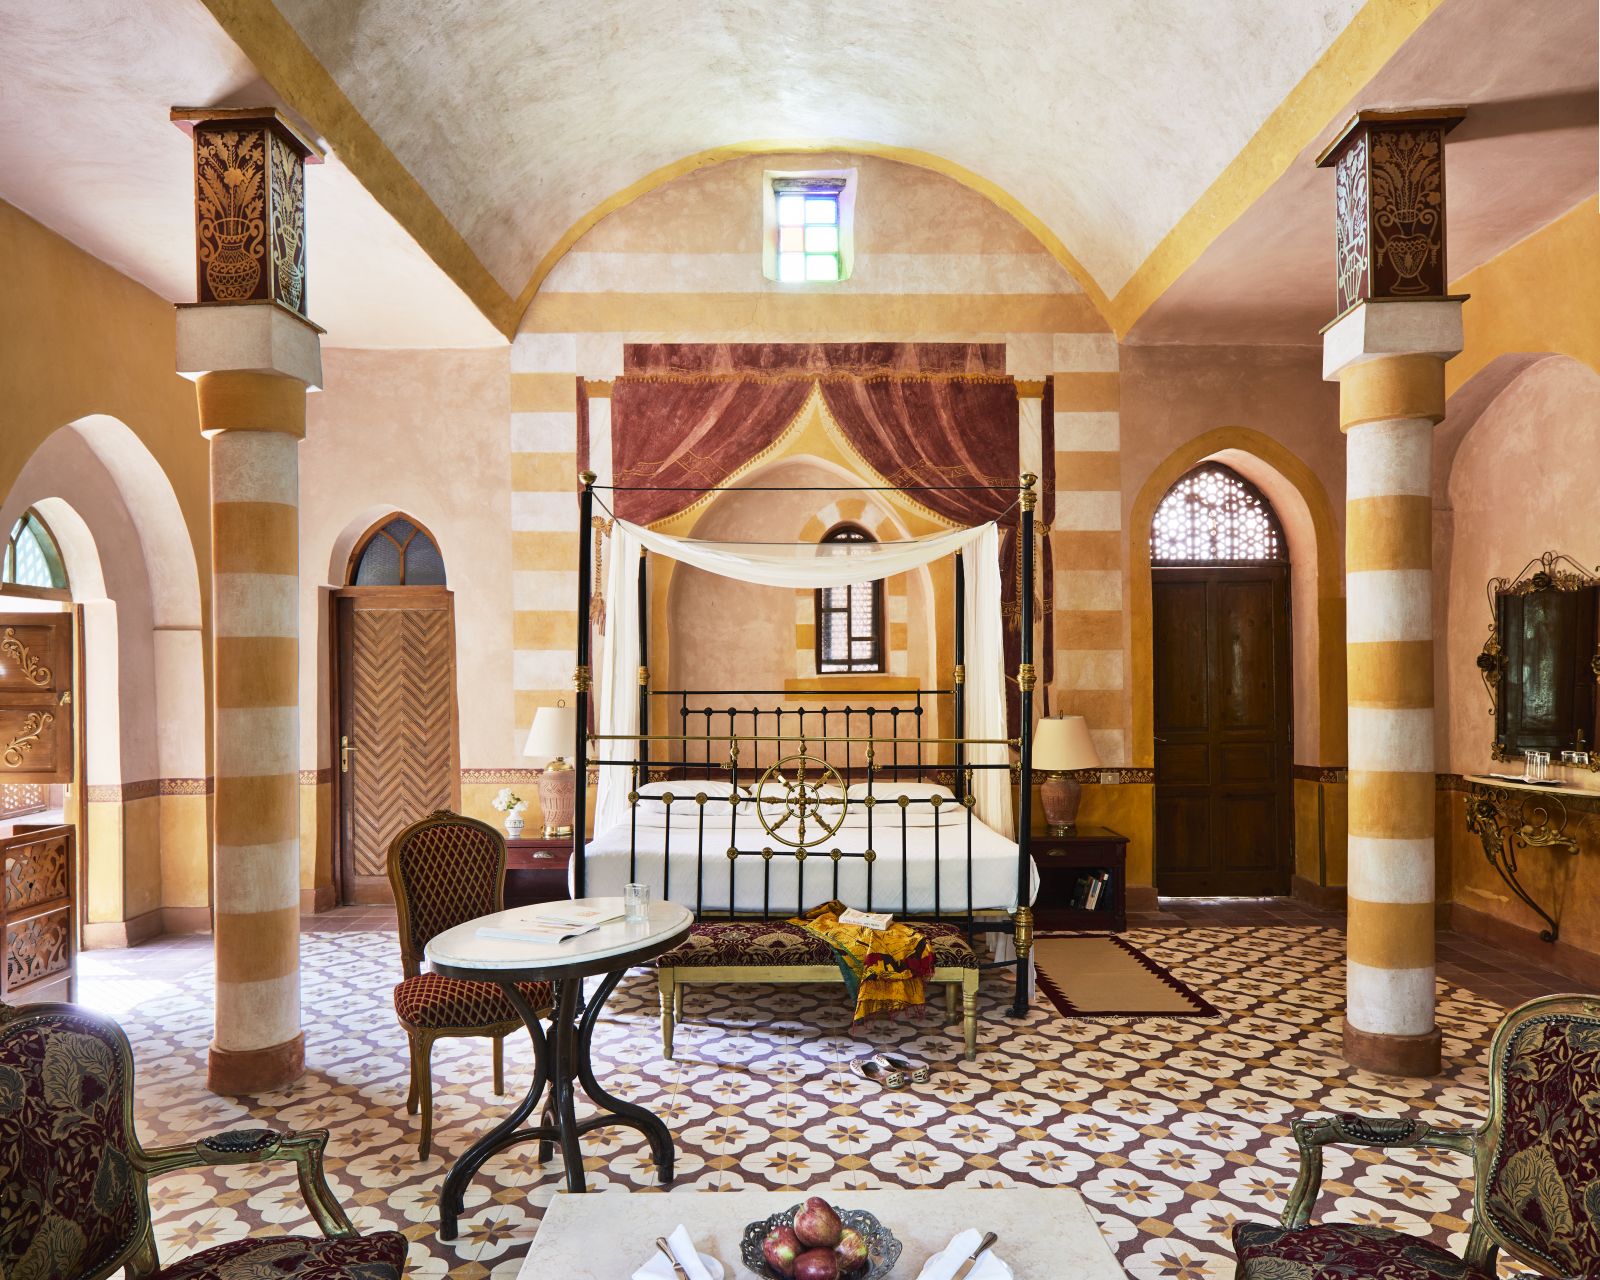 Suite at the Al Moudira hotel in Luxor